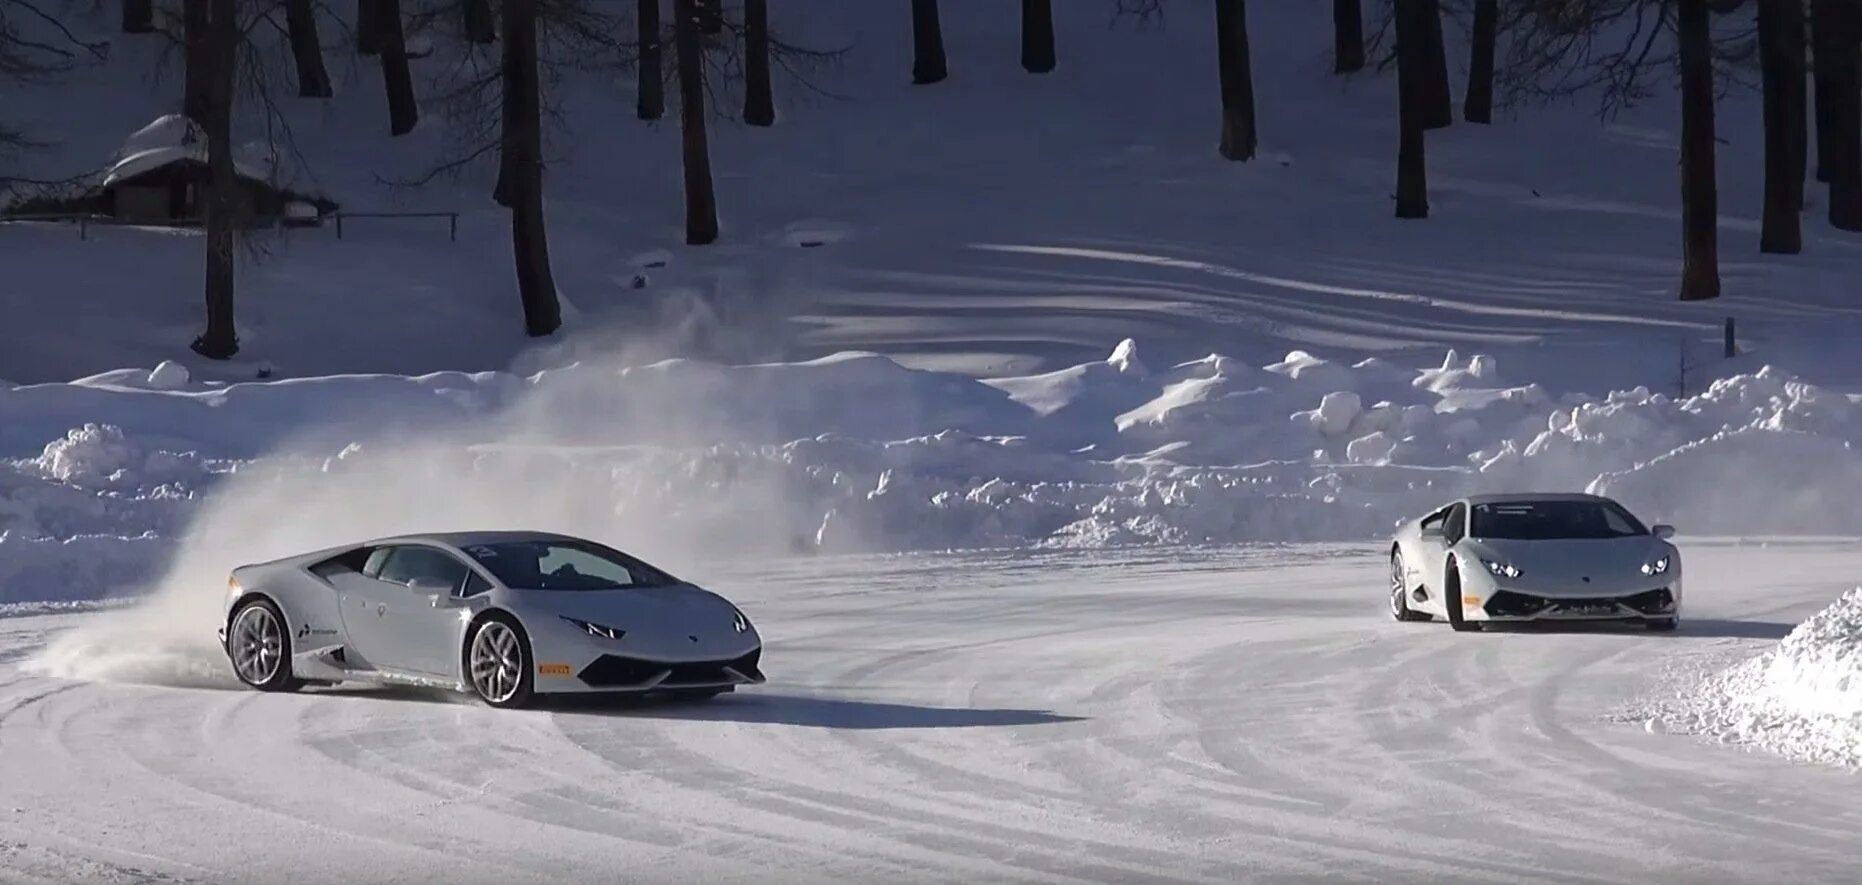 Drifting snow. Ламборгини Хуракан дрифт зимой. Ламборджини Хуракан зима. Lamborghini Huracan зимой. Машина в снегу.